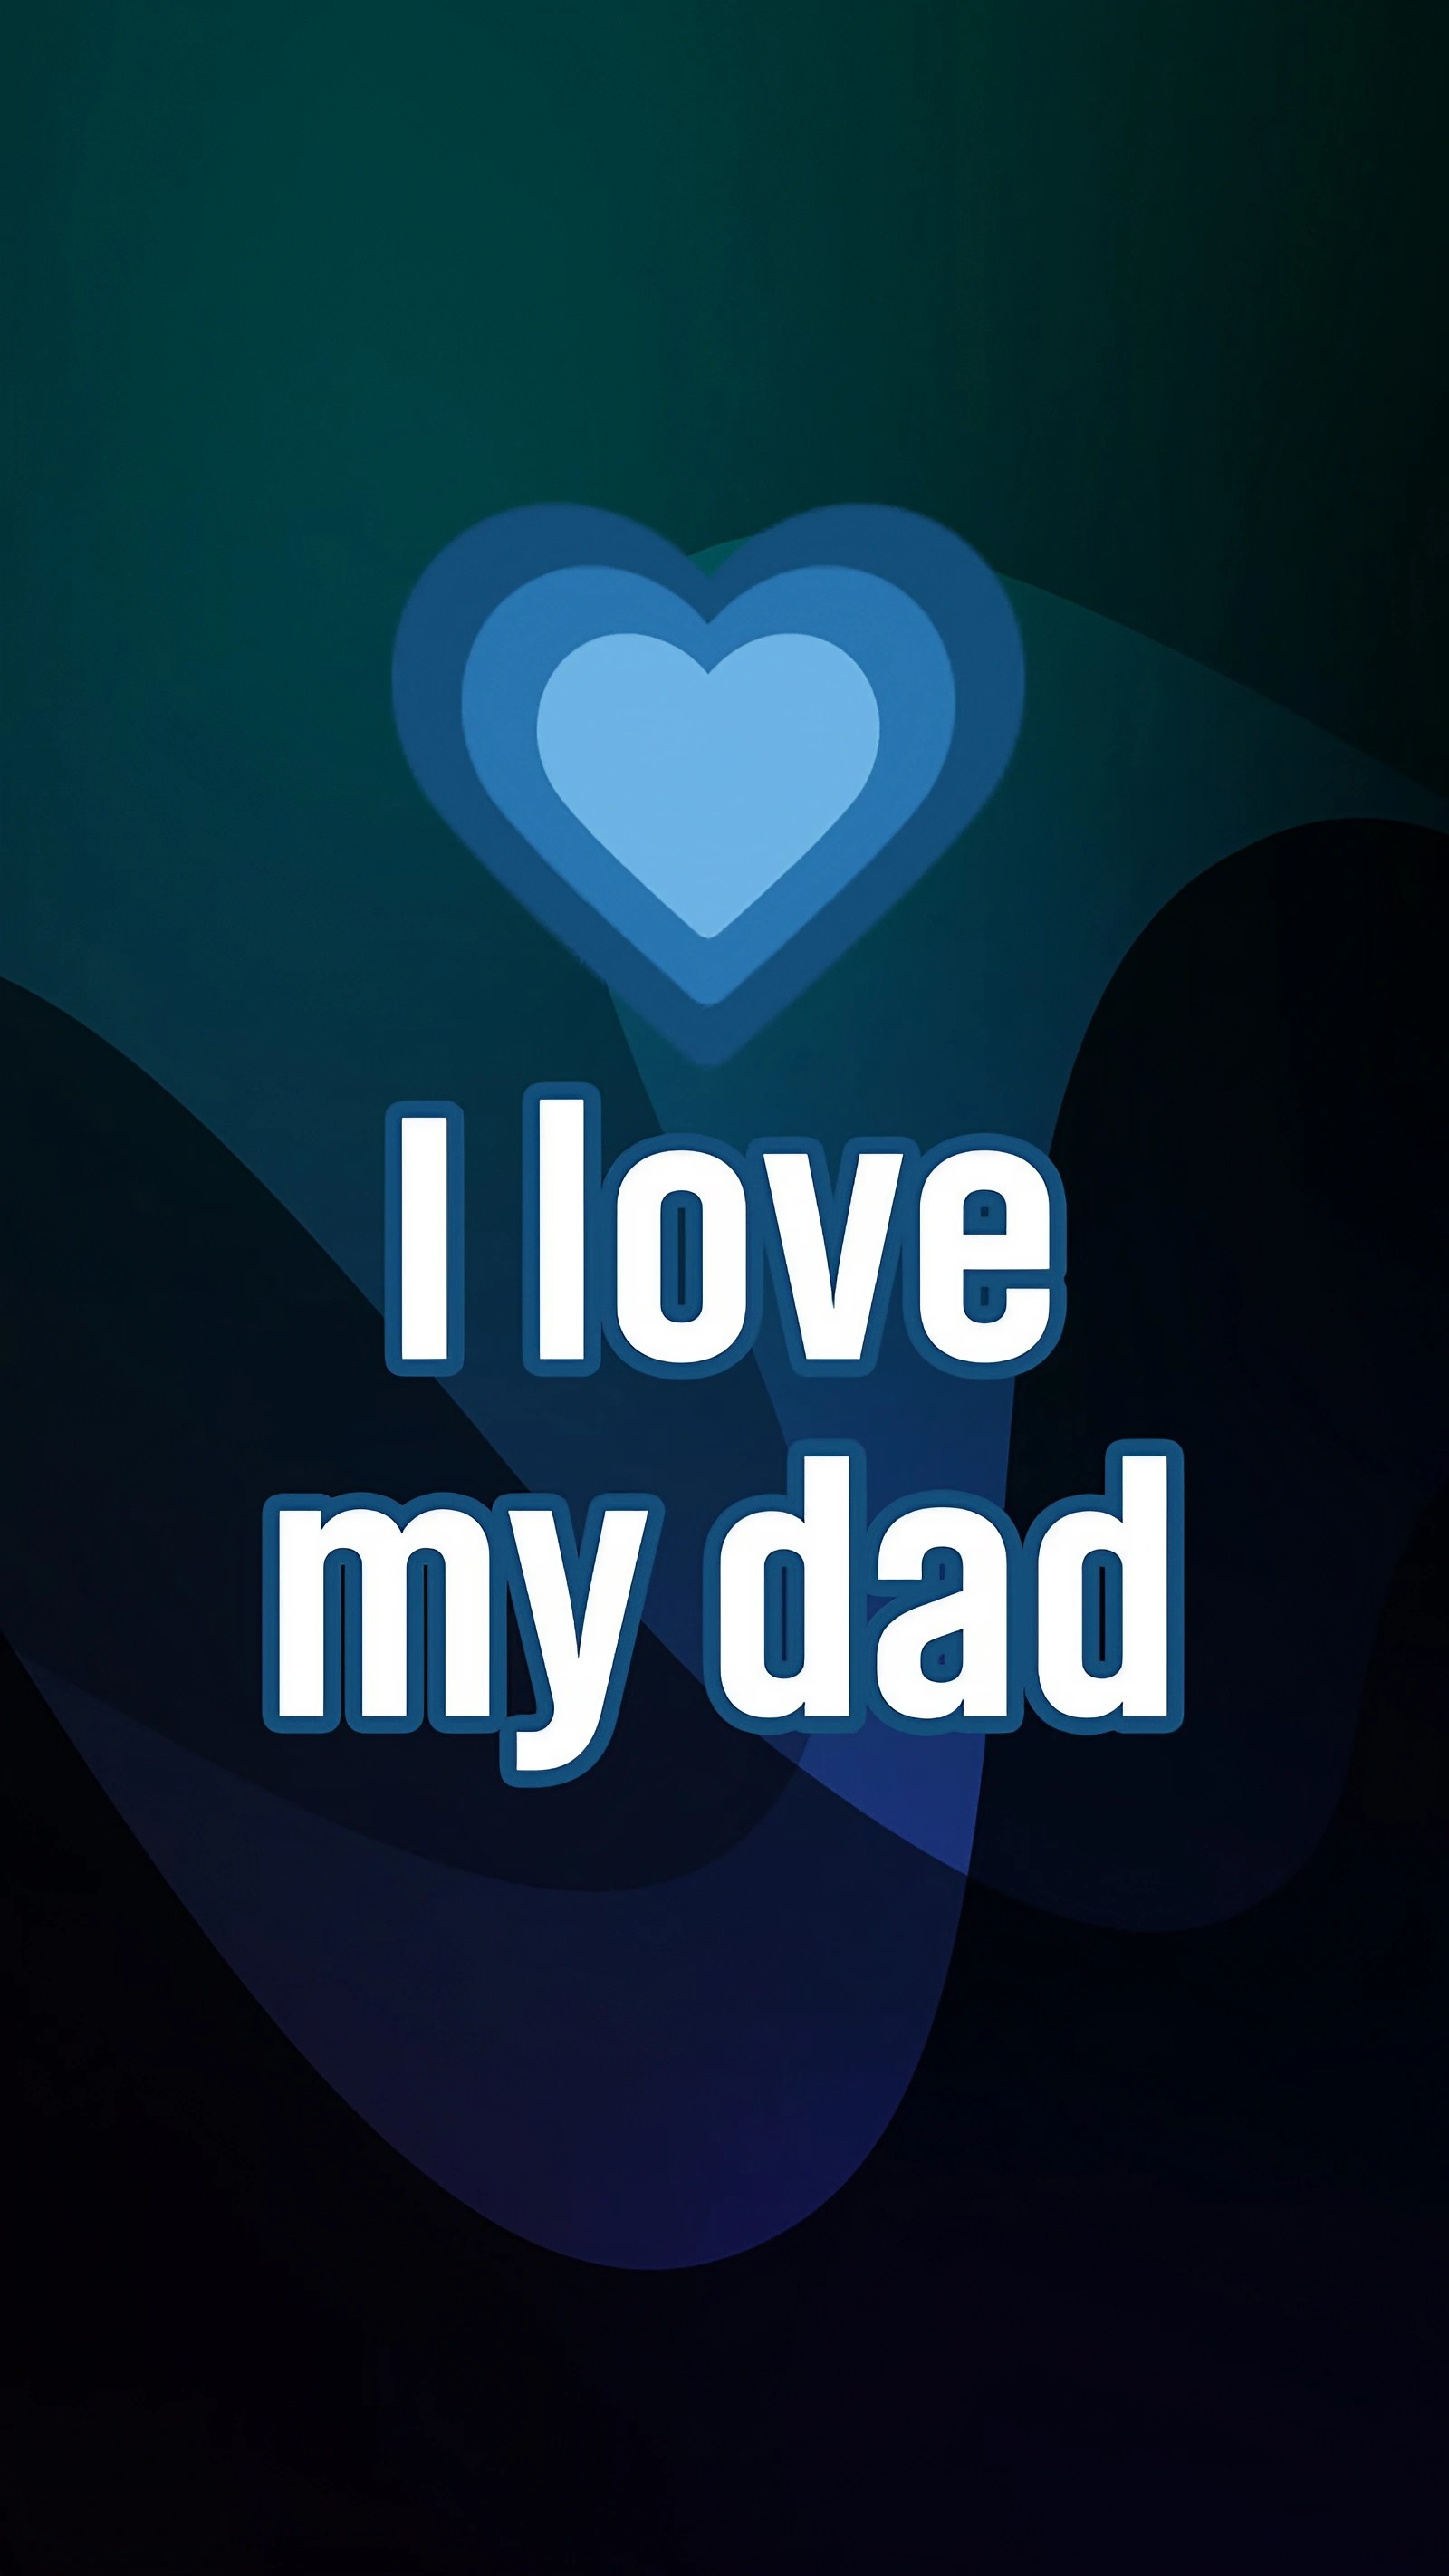 I Love My Dad - Blue Heart